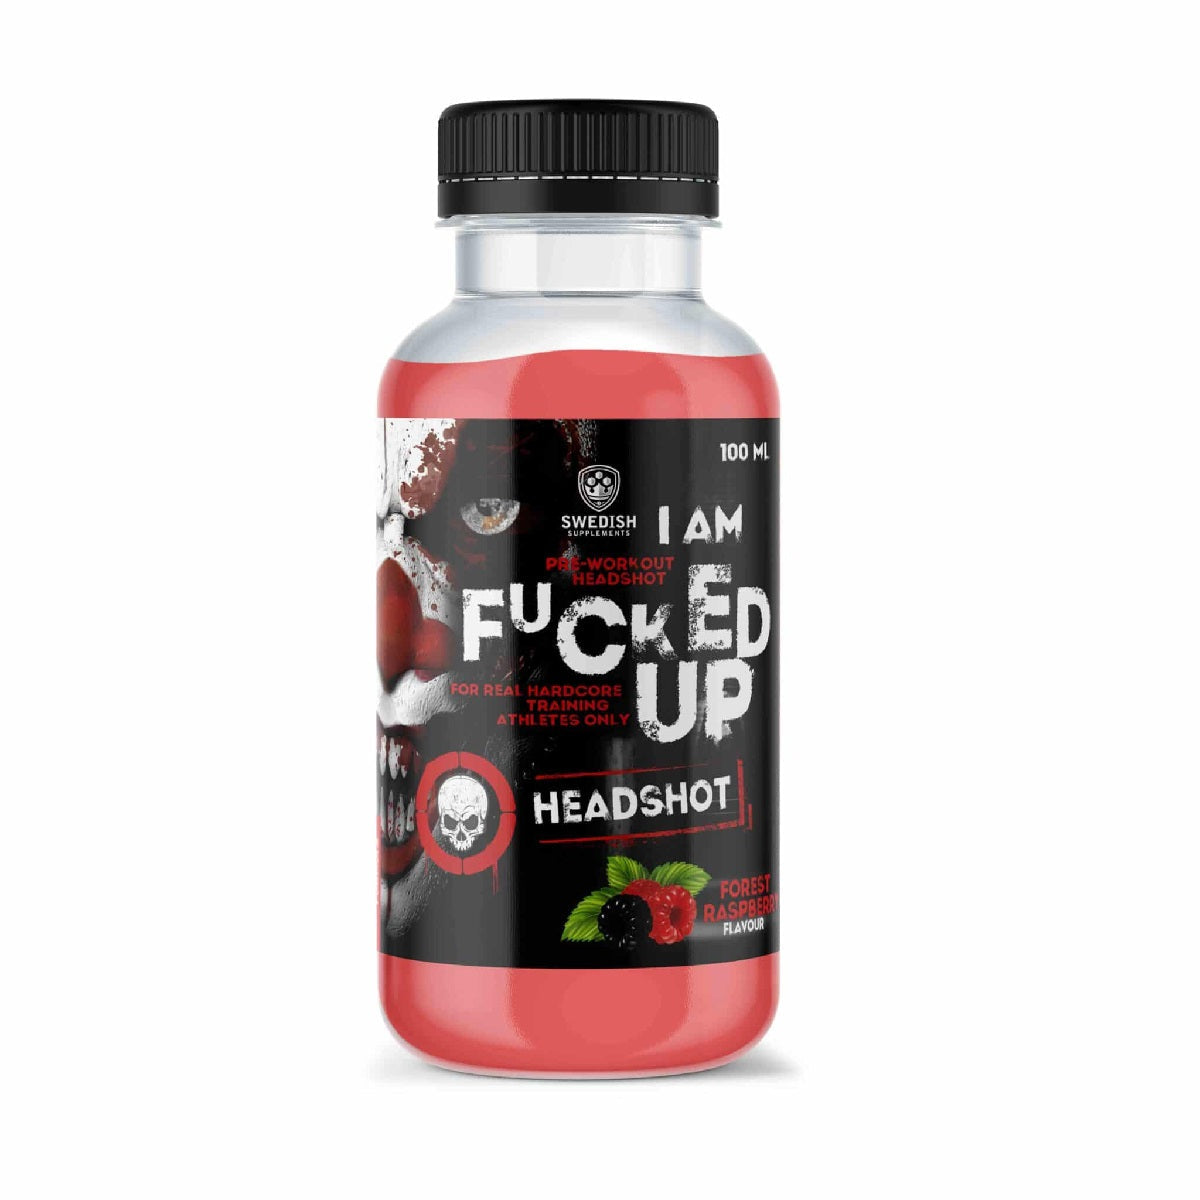 Swedish Supplements Fucked Up Headshot, 16x100ml -  |  Richbeauty